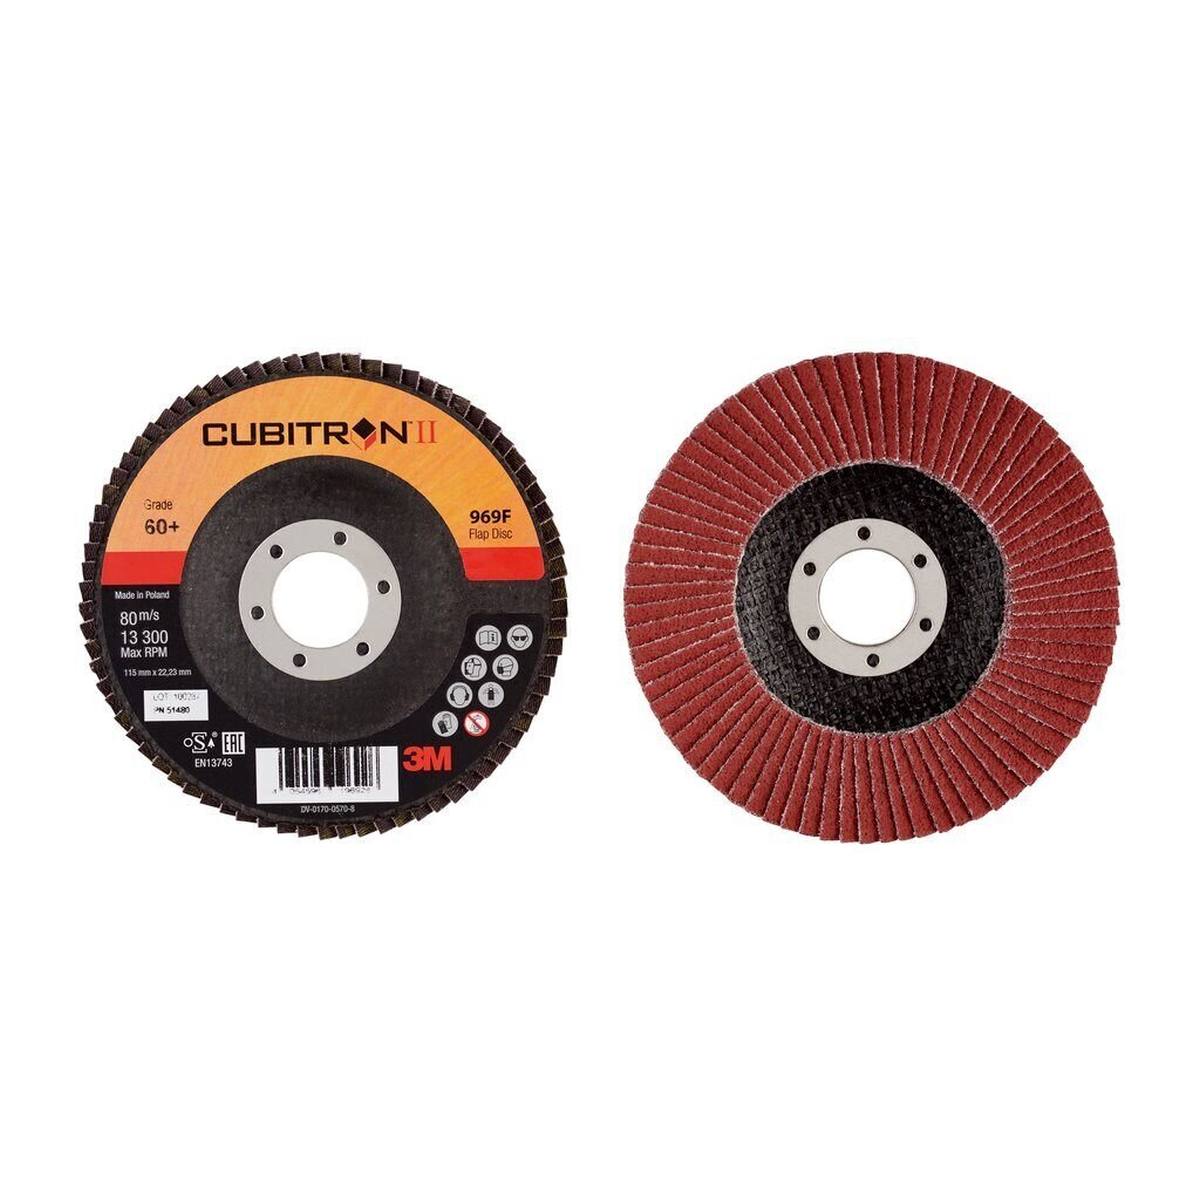 3M 969F Cubitron II flap discs d=115mm P60 #51480 flat